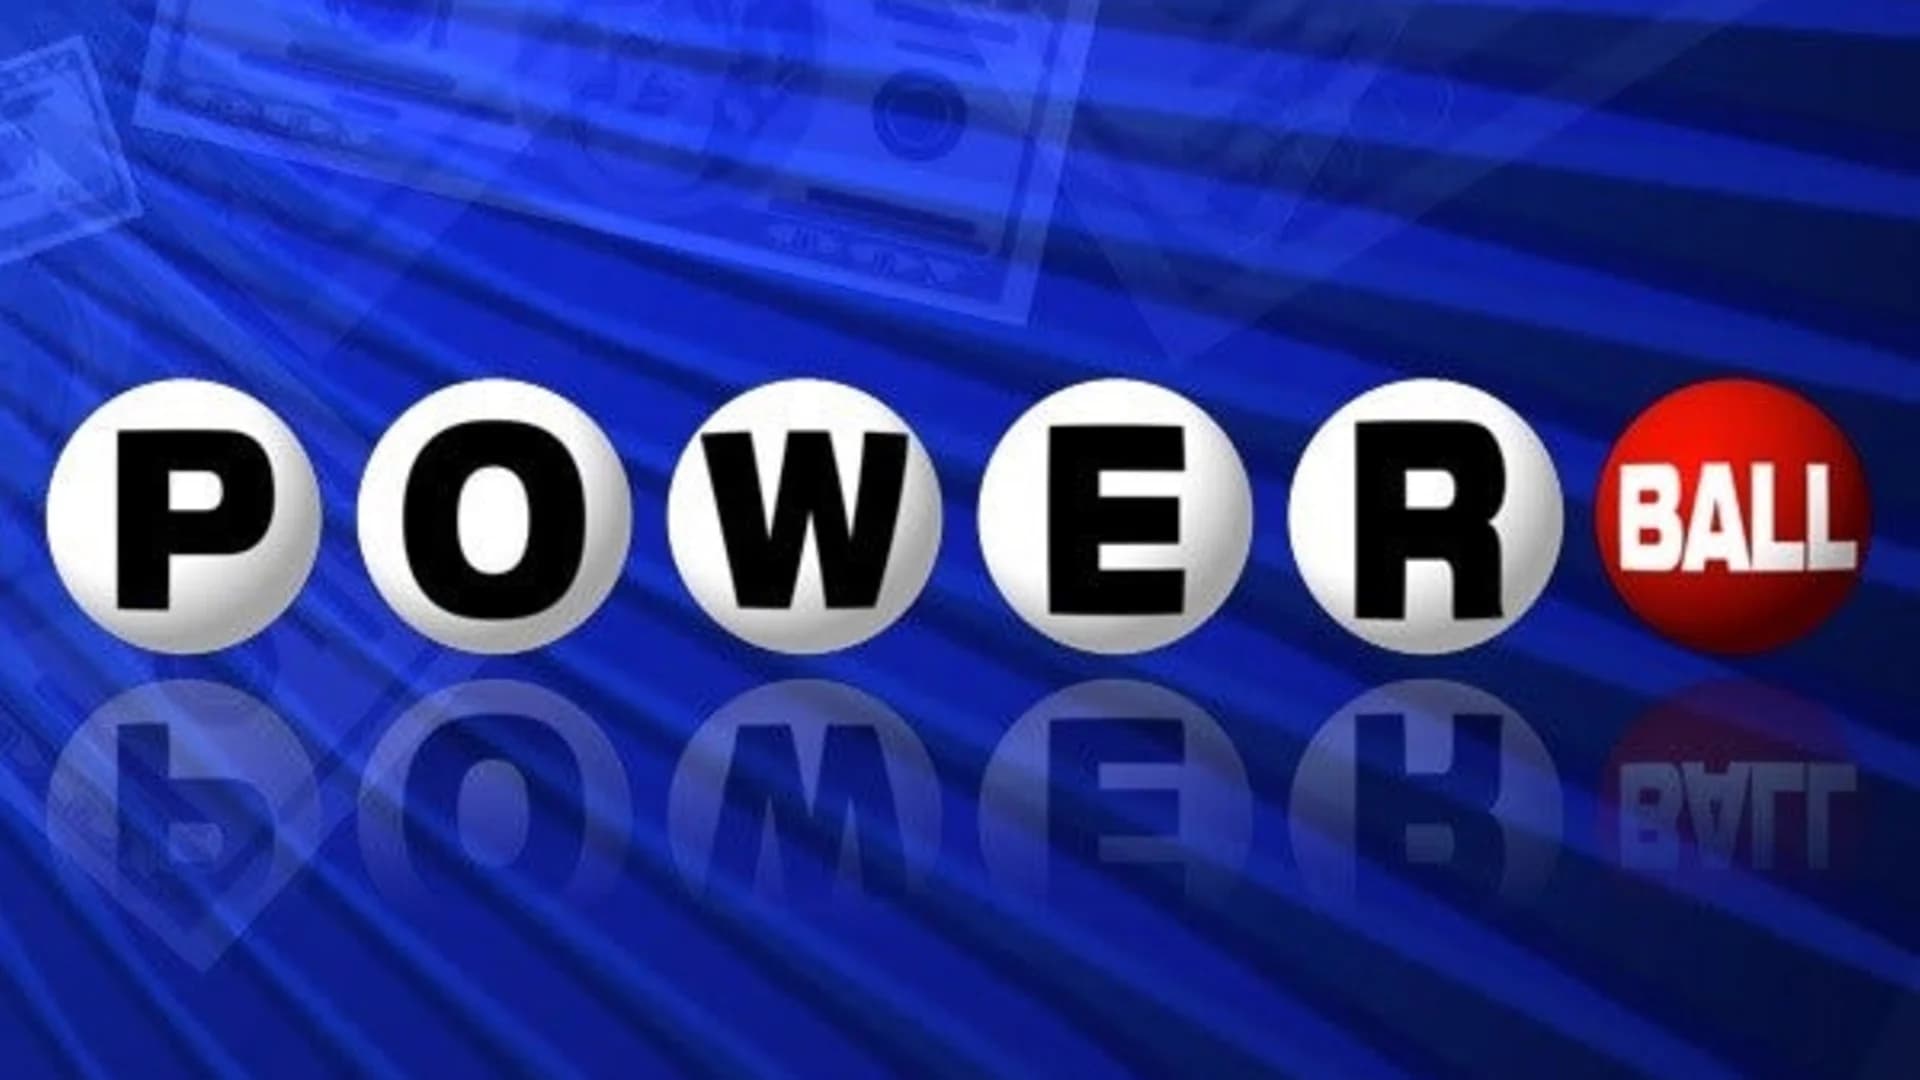 Powerball jackpot sits at $750 million